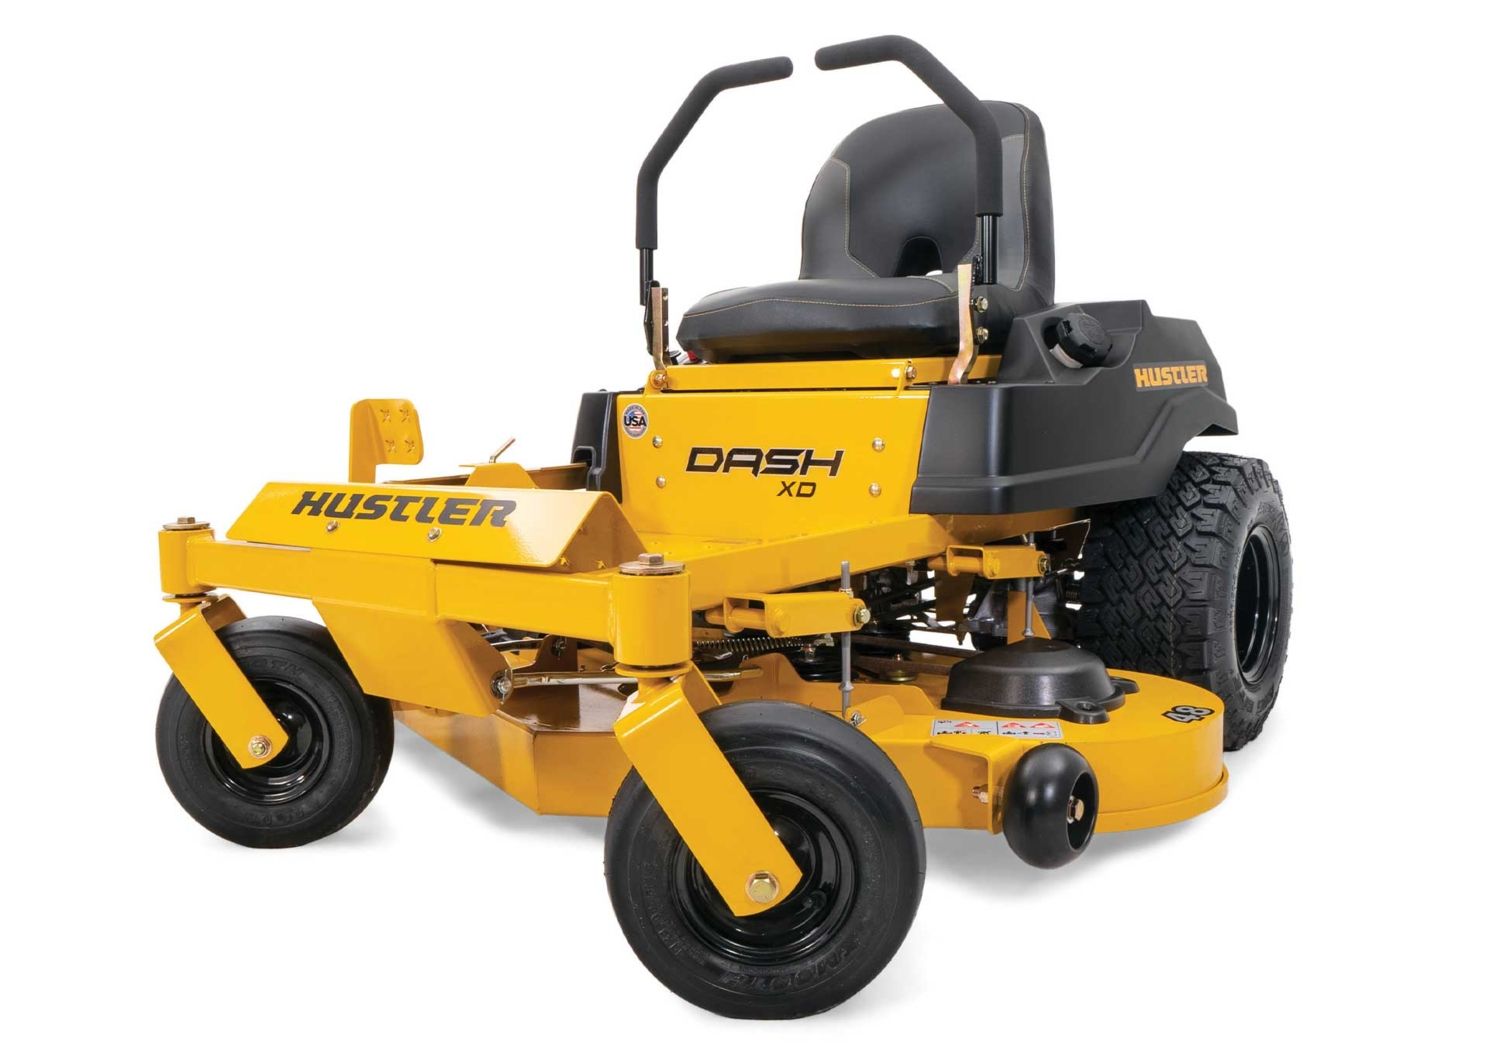 Image of the Hustler Dash XD 34" Zero Turn Lawn Mower